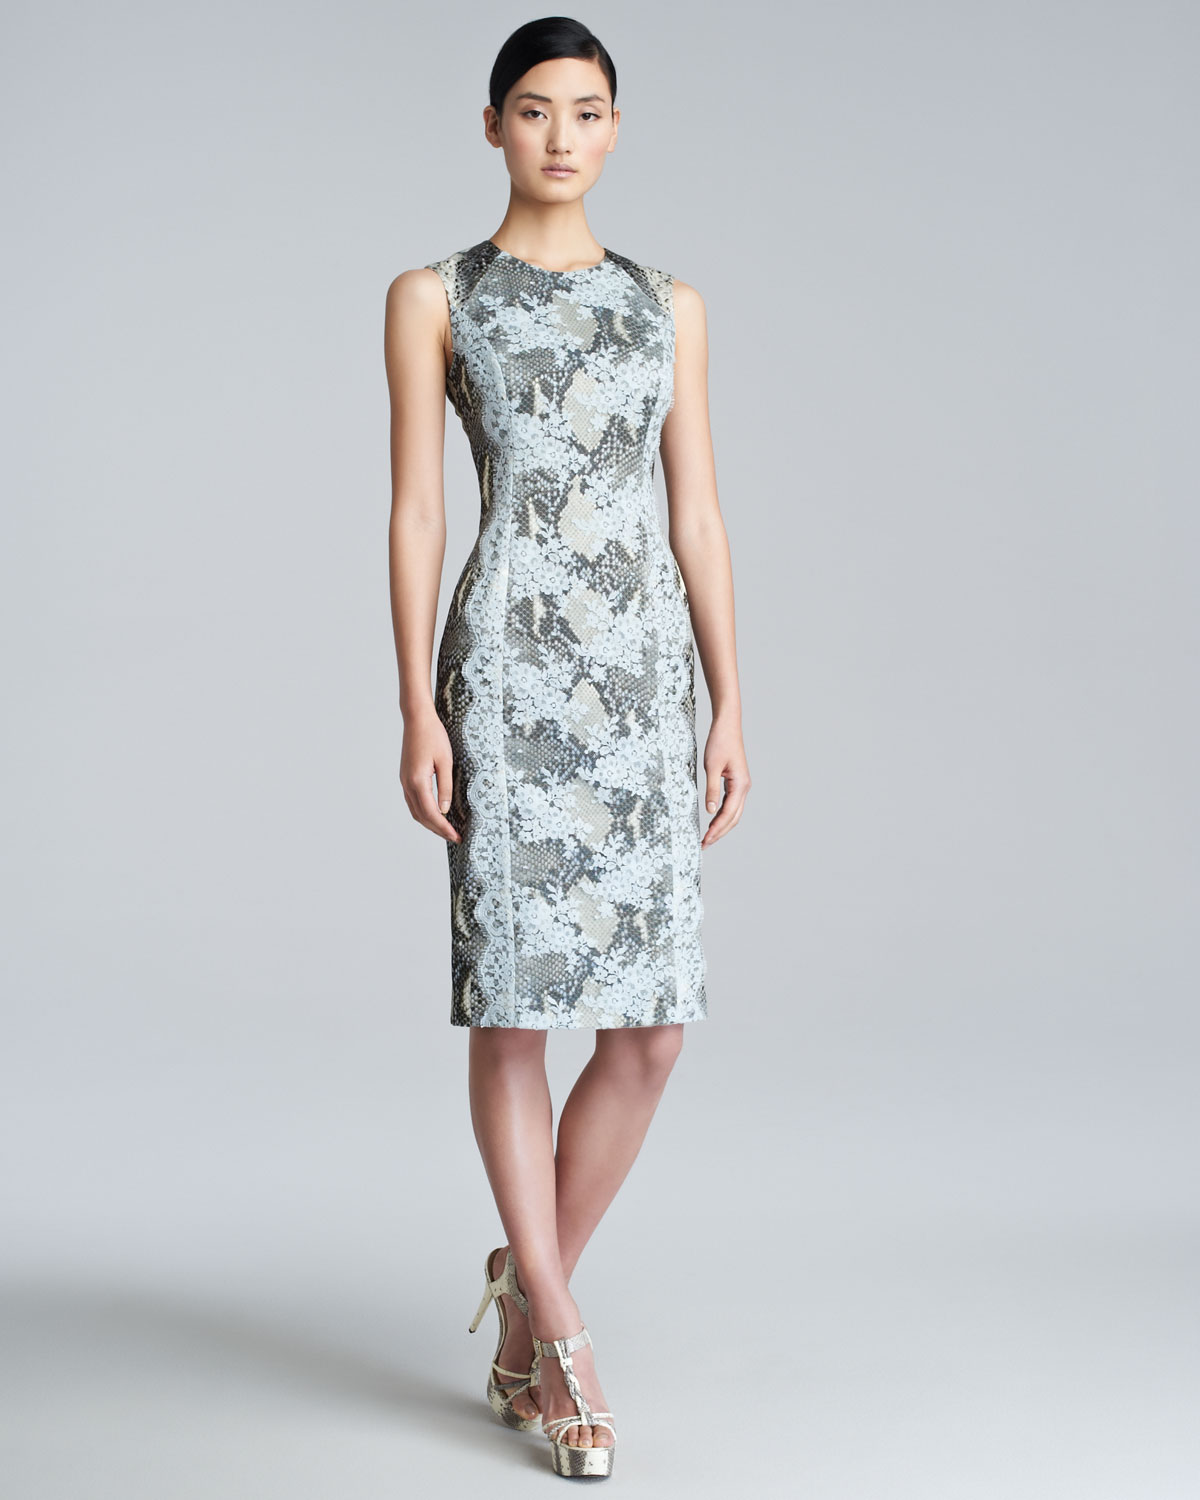 Lyst - Erdem Tali Printed Sheath Dress in Gray